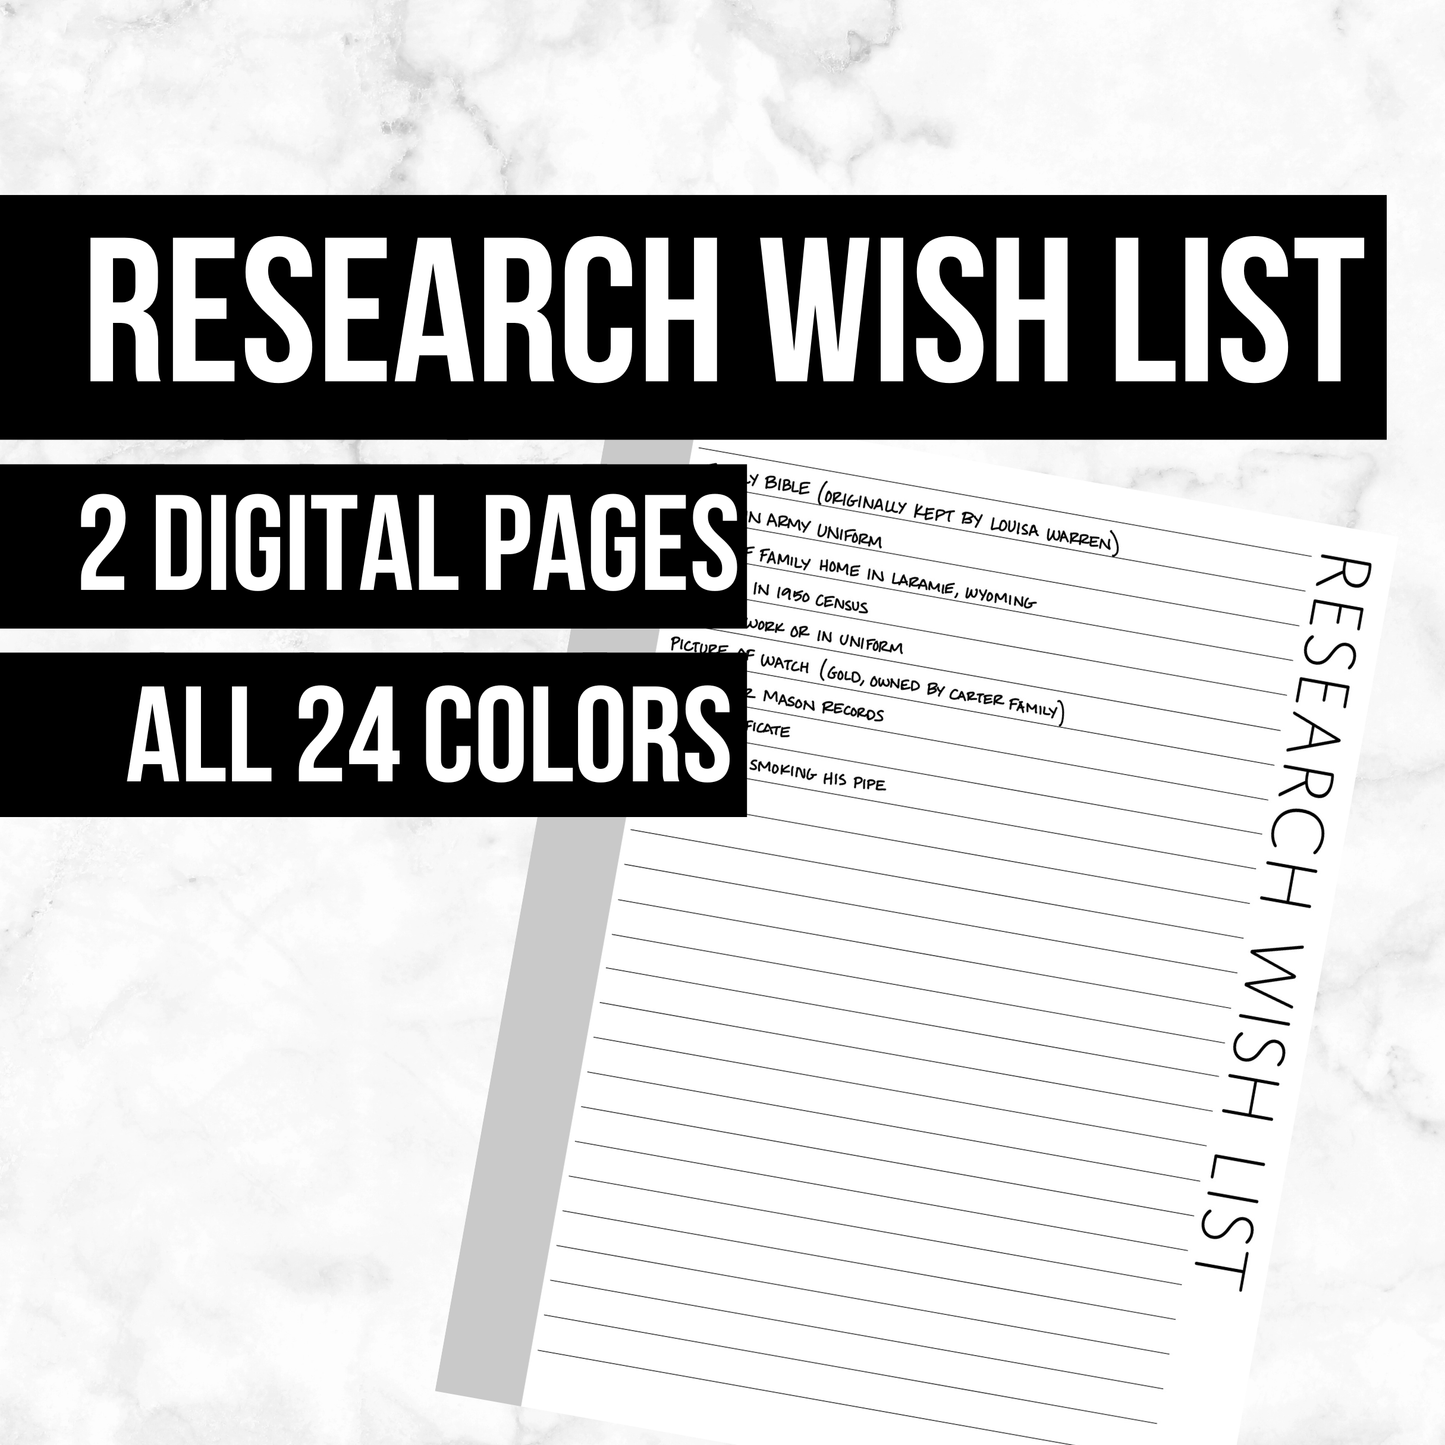 Research Wish List: Printable Genealogy Form (Digital Download)